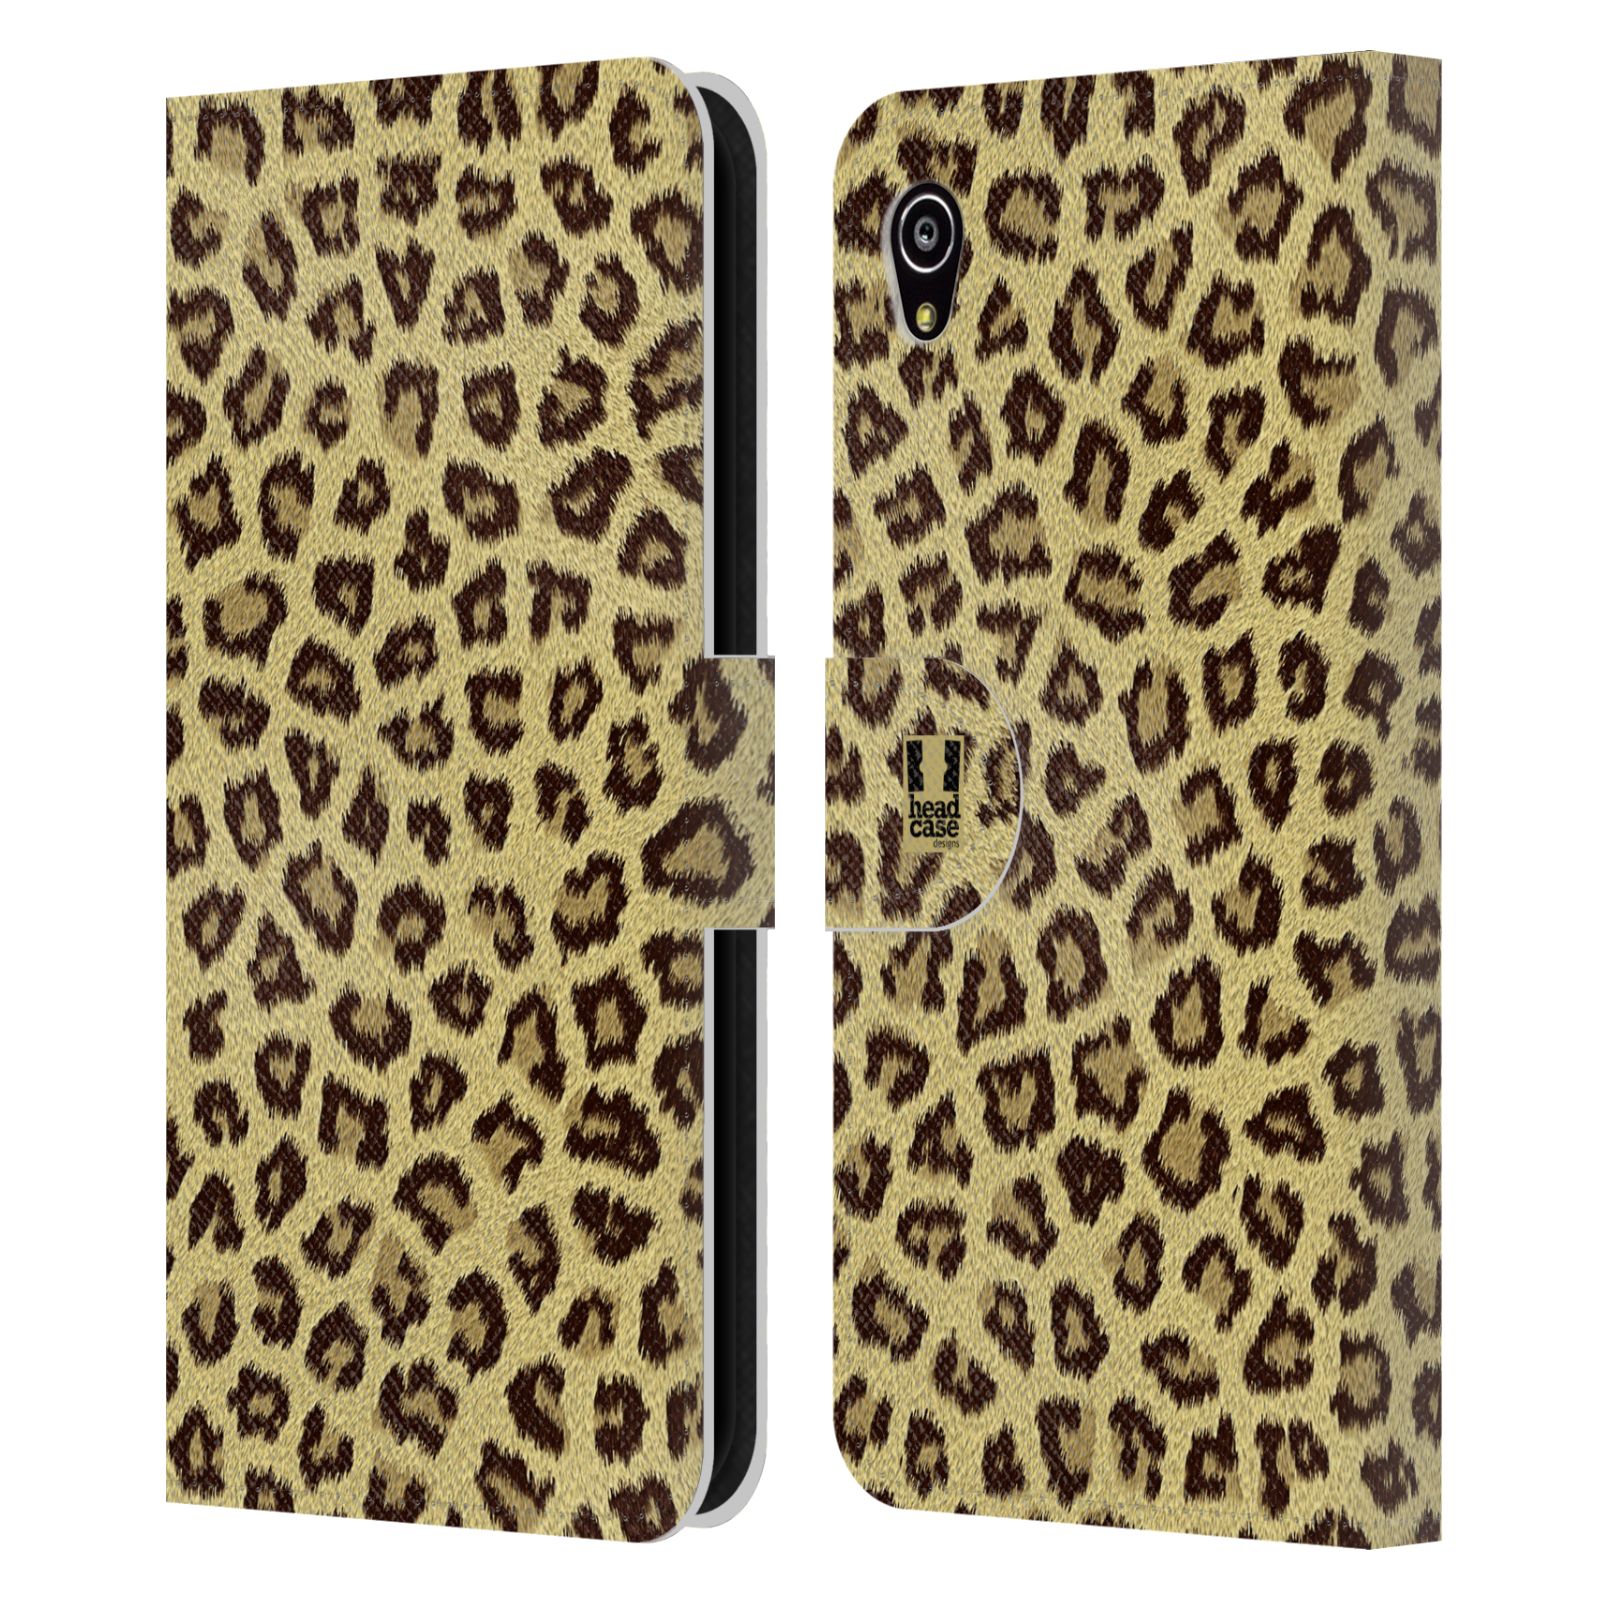 HEAD CASE Flipové pouzdro pro mobil SONY XPERIA M4 AQUA zvíře srst divoká kolekce jaguár, gepard